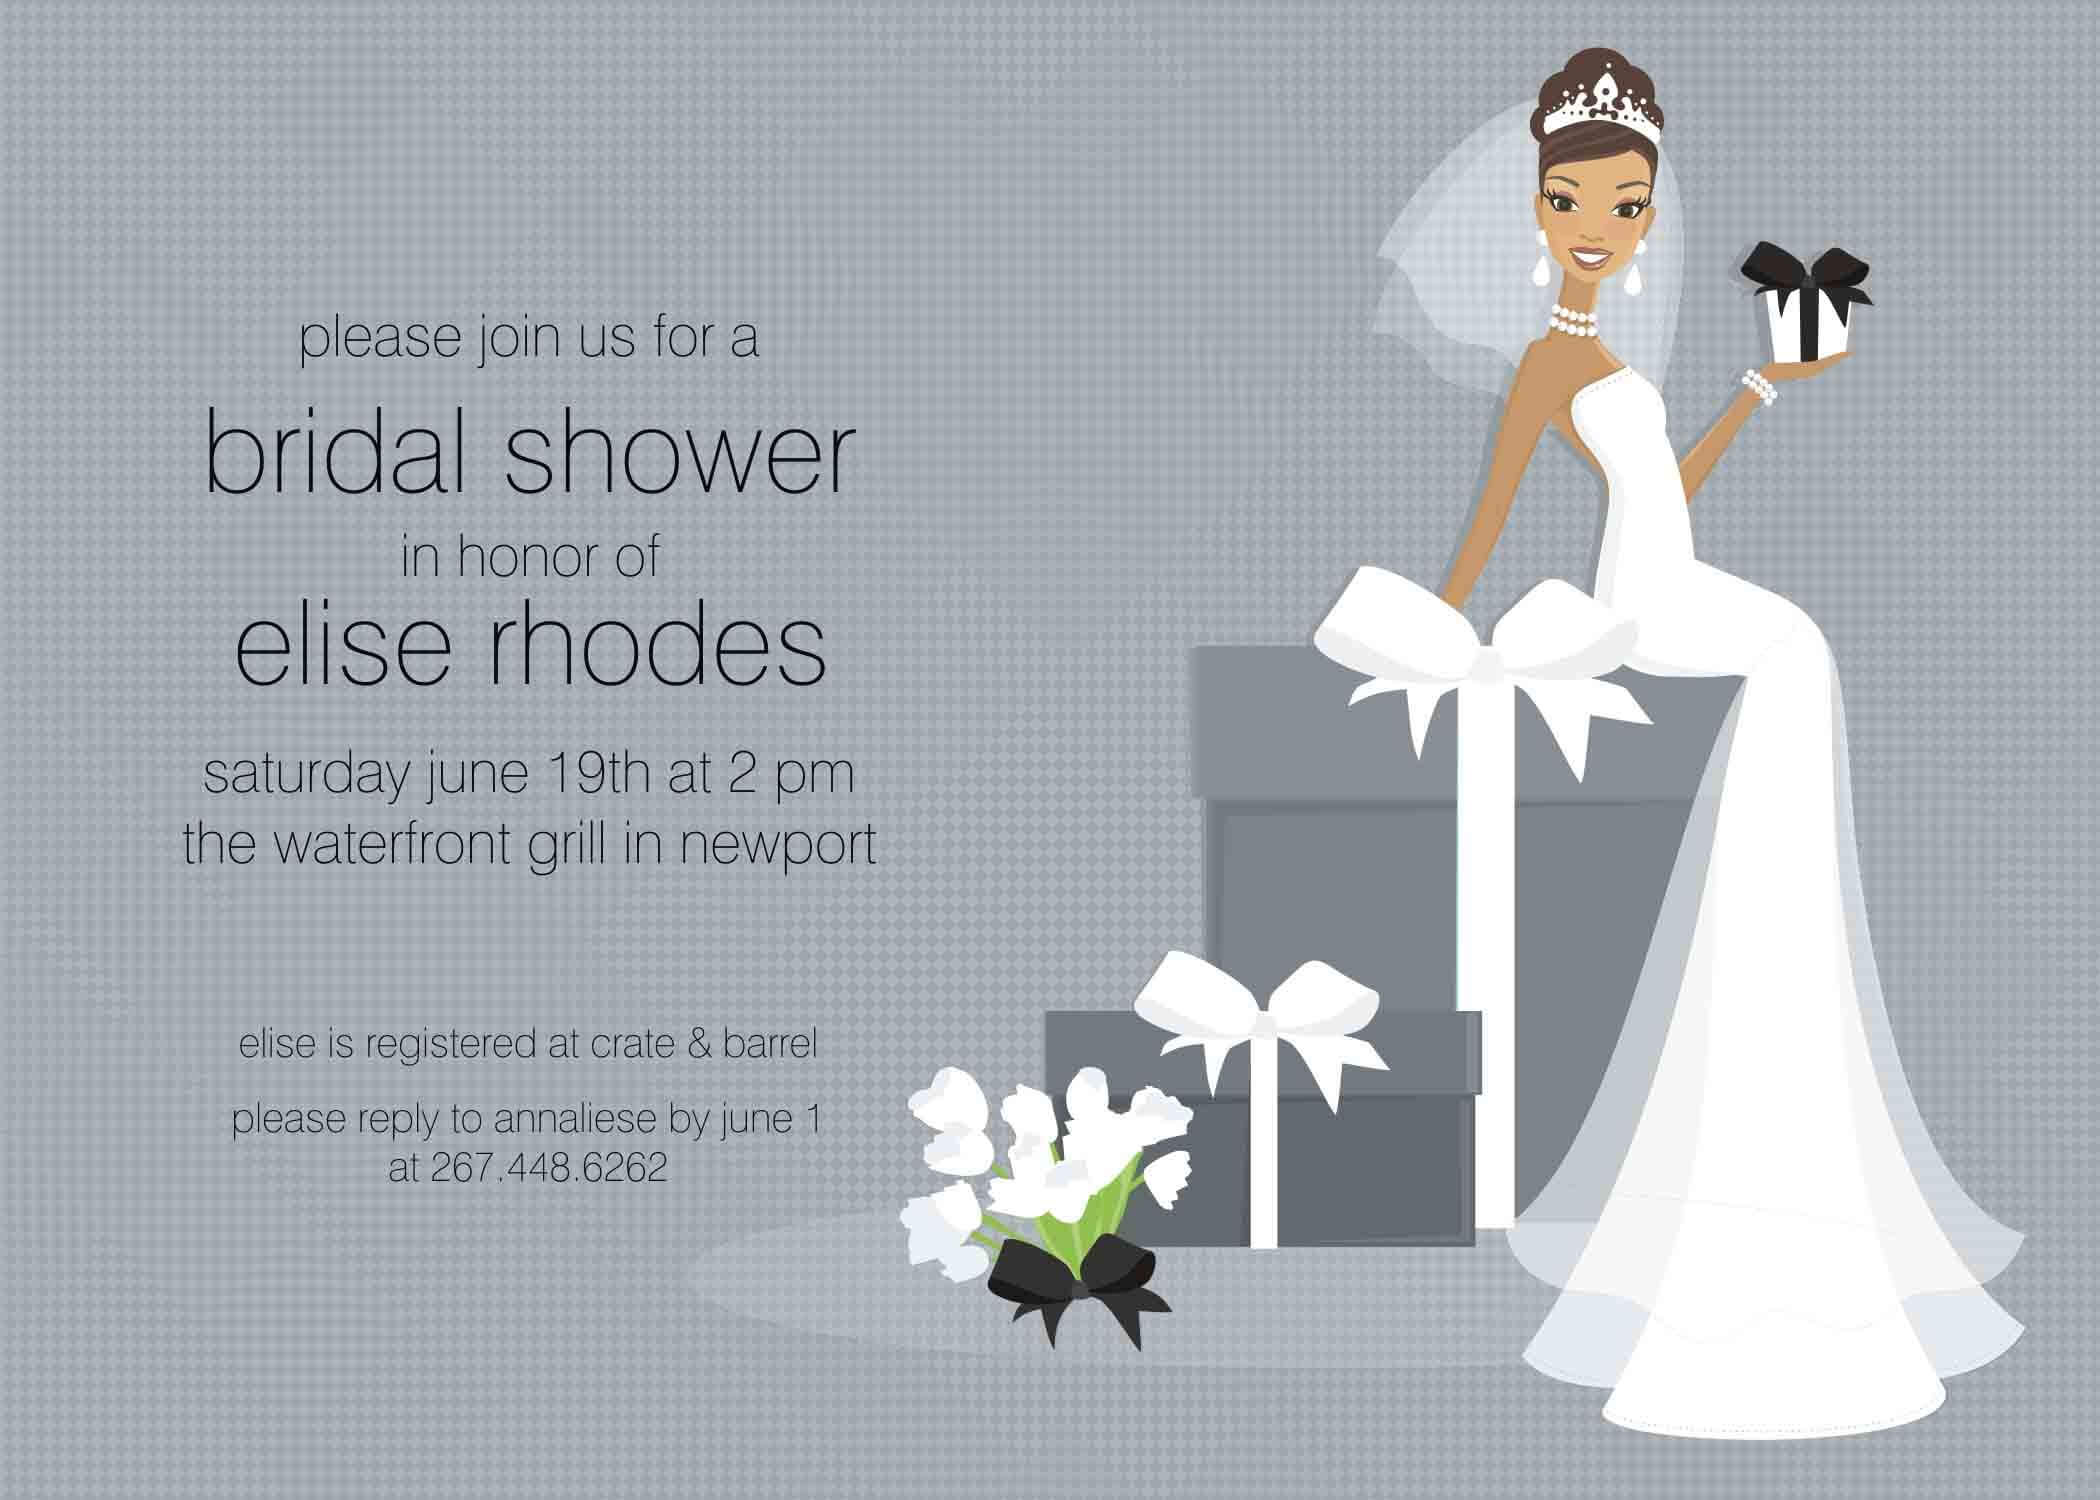 Free Bridal Shower Invitation Templates | Free Wedding With Regard To Blank Bridal Shower Invitations Templates